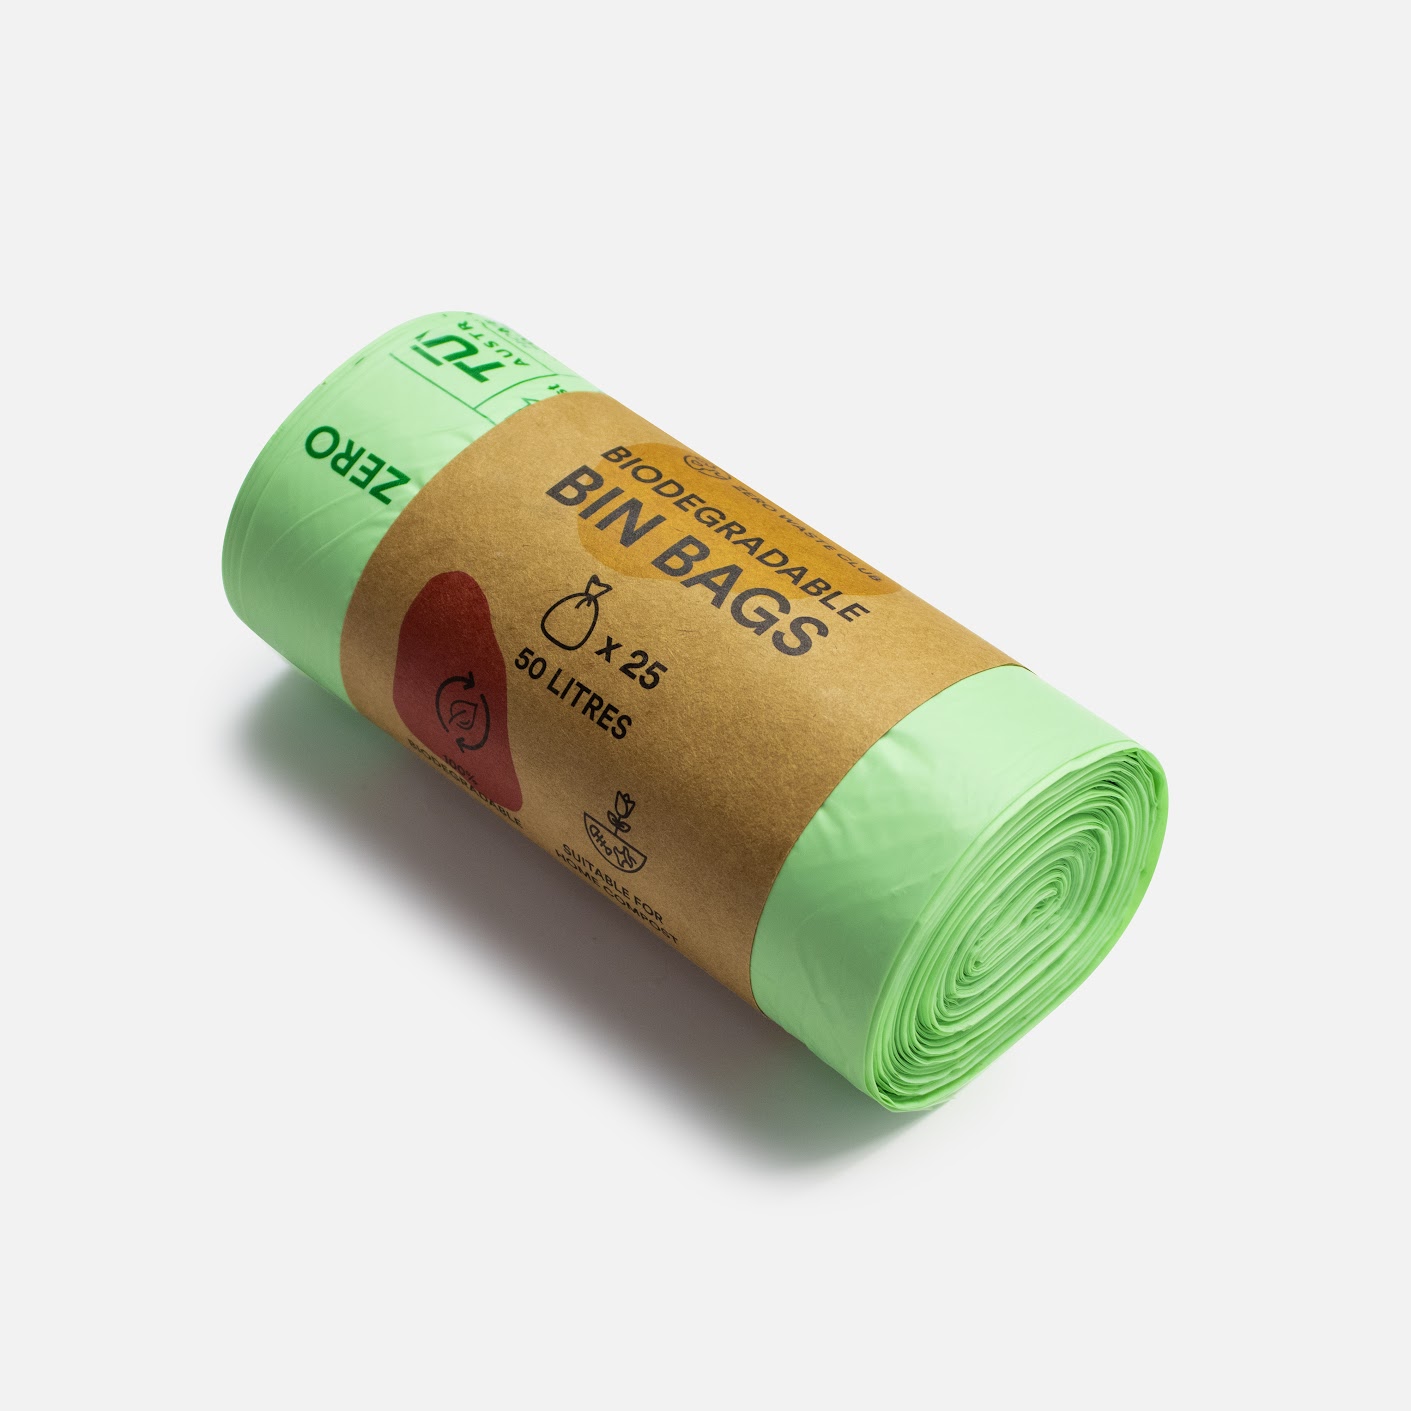 biodegradable bin bag zero waste club 3